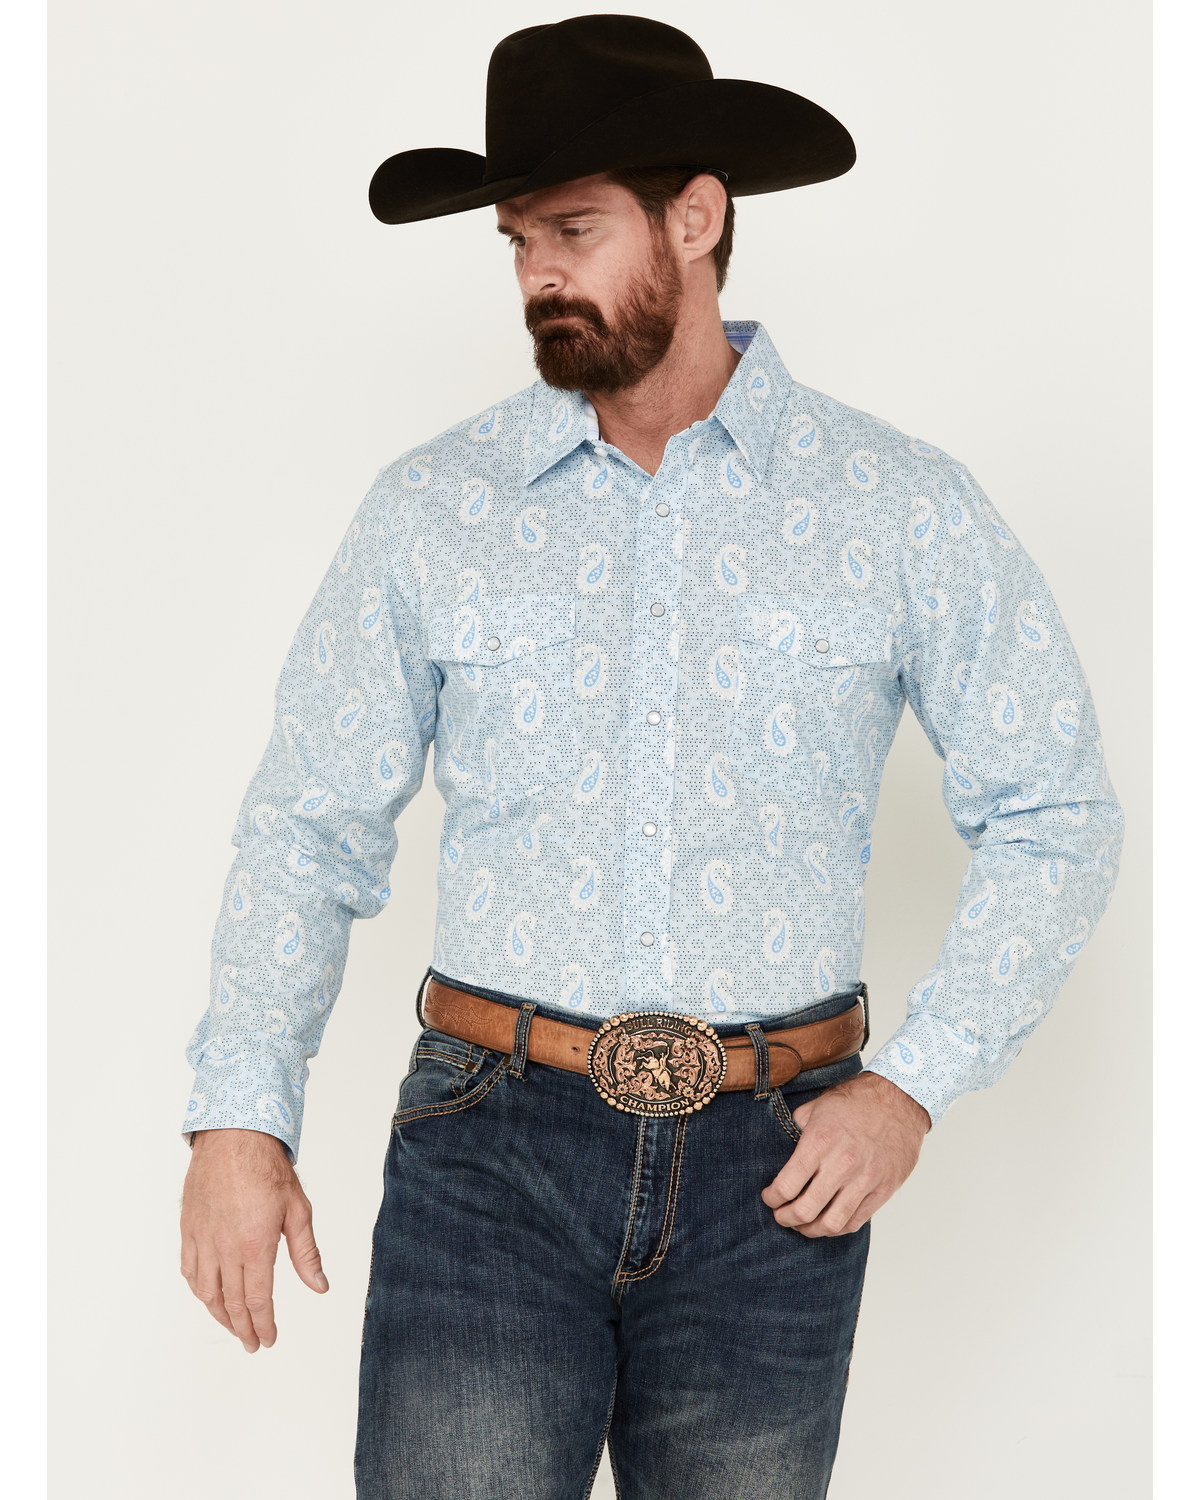 Panhandle Men's Paisley Print Long Sleeve Pearl Snap Western Shirt